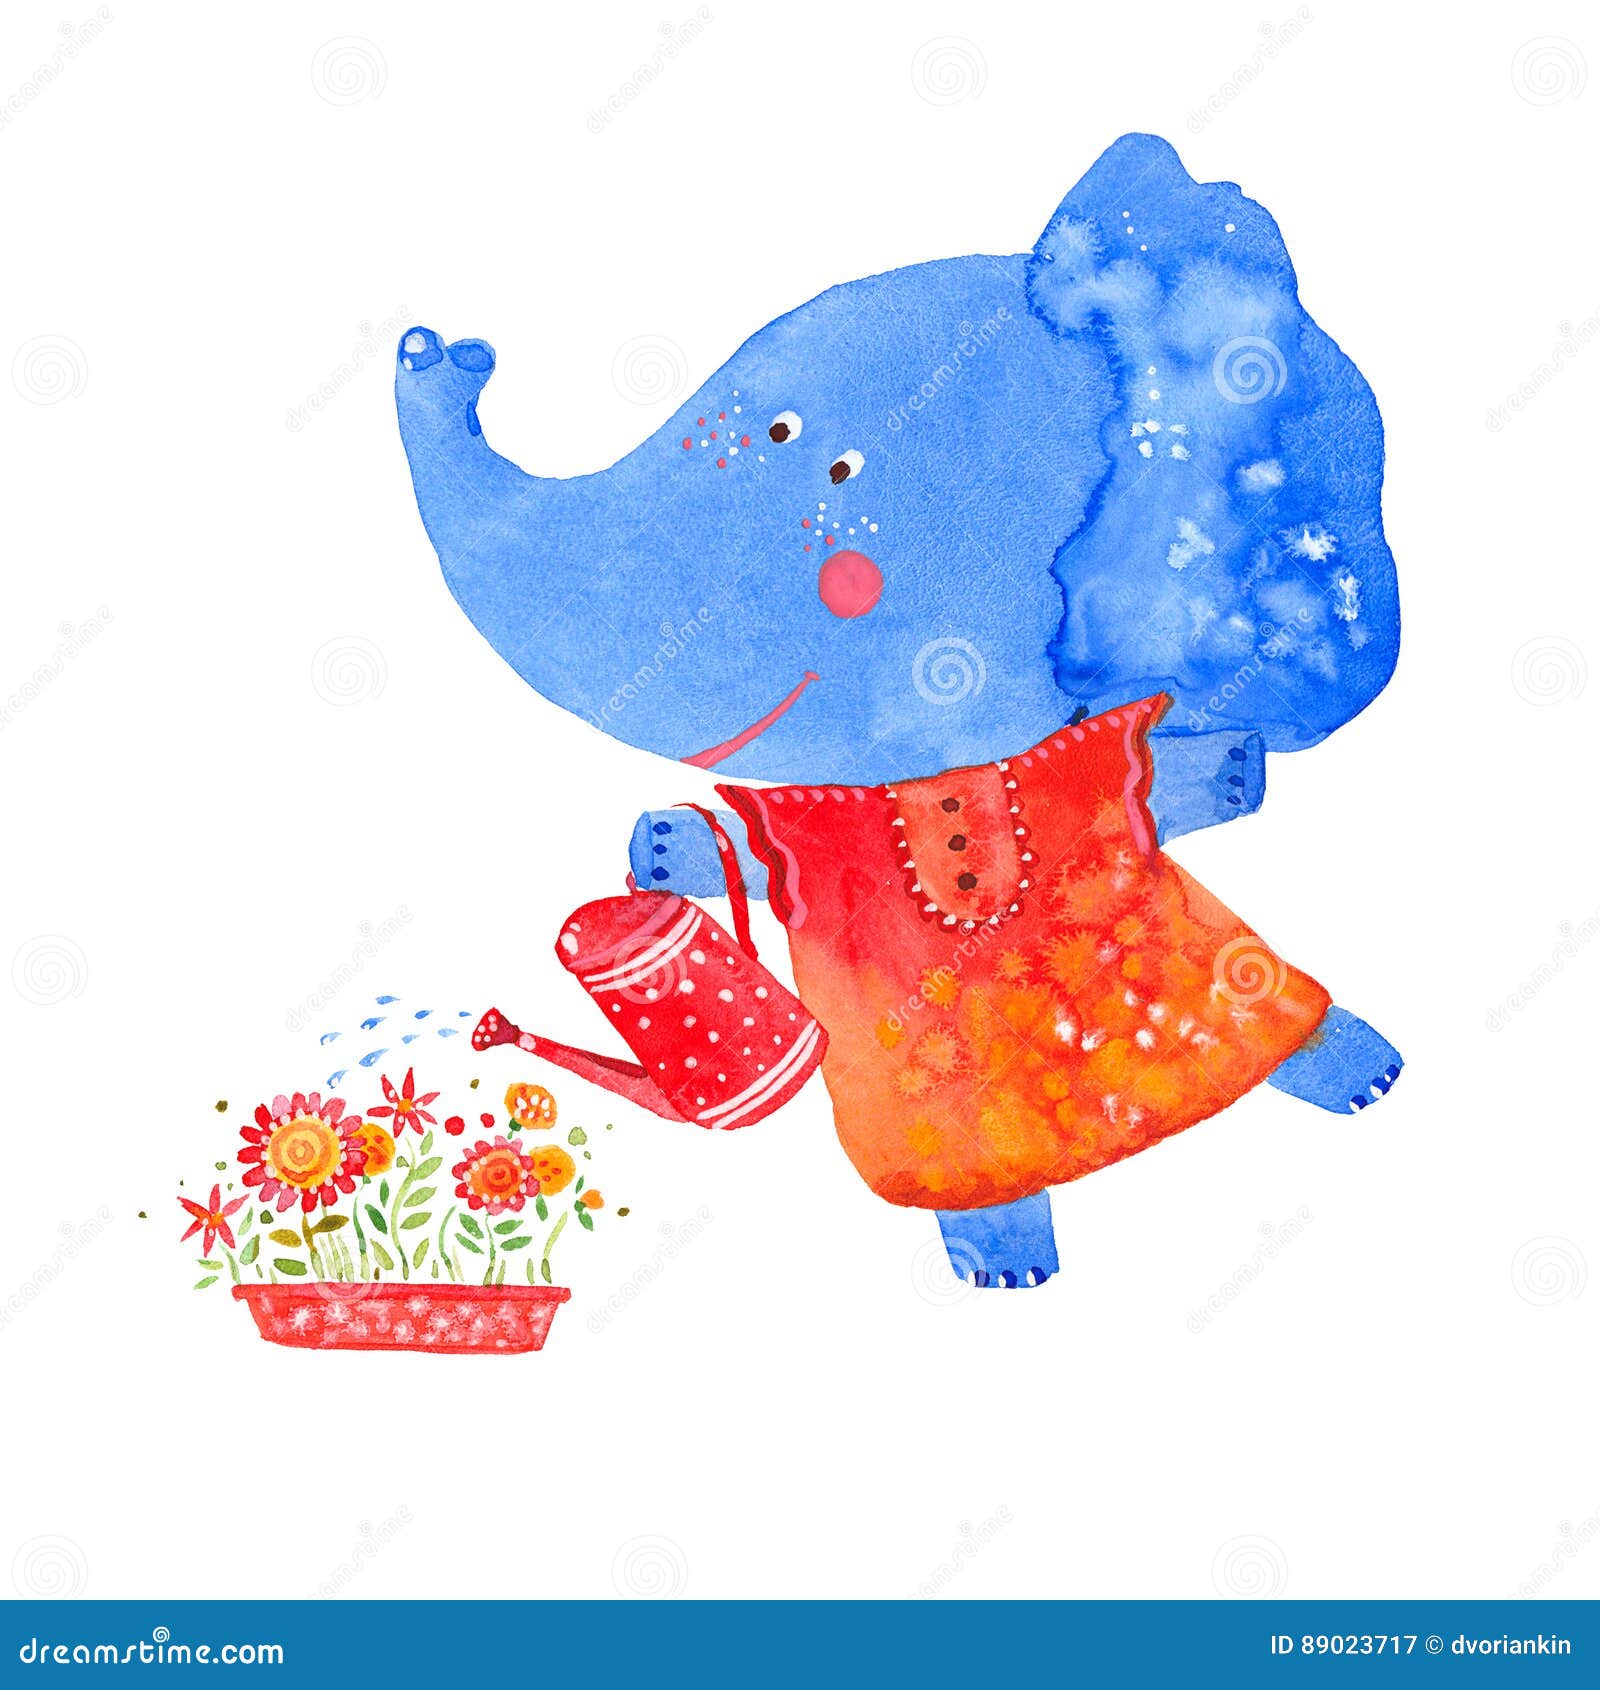 Elephant watering flowers stock illustration. Illustration of smiling ...